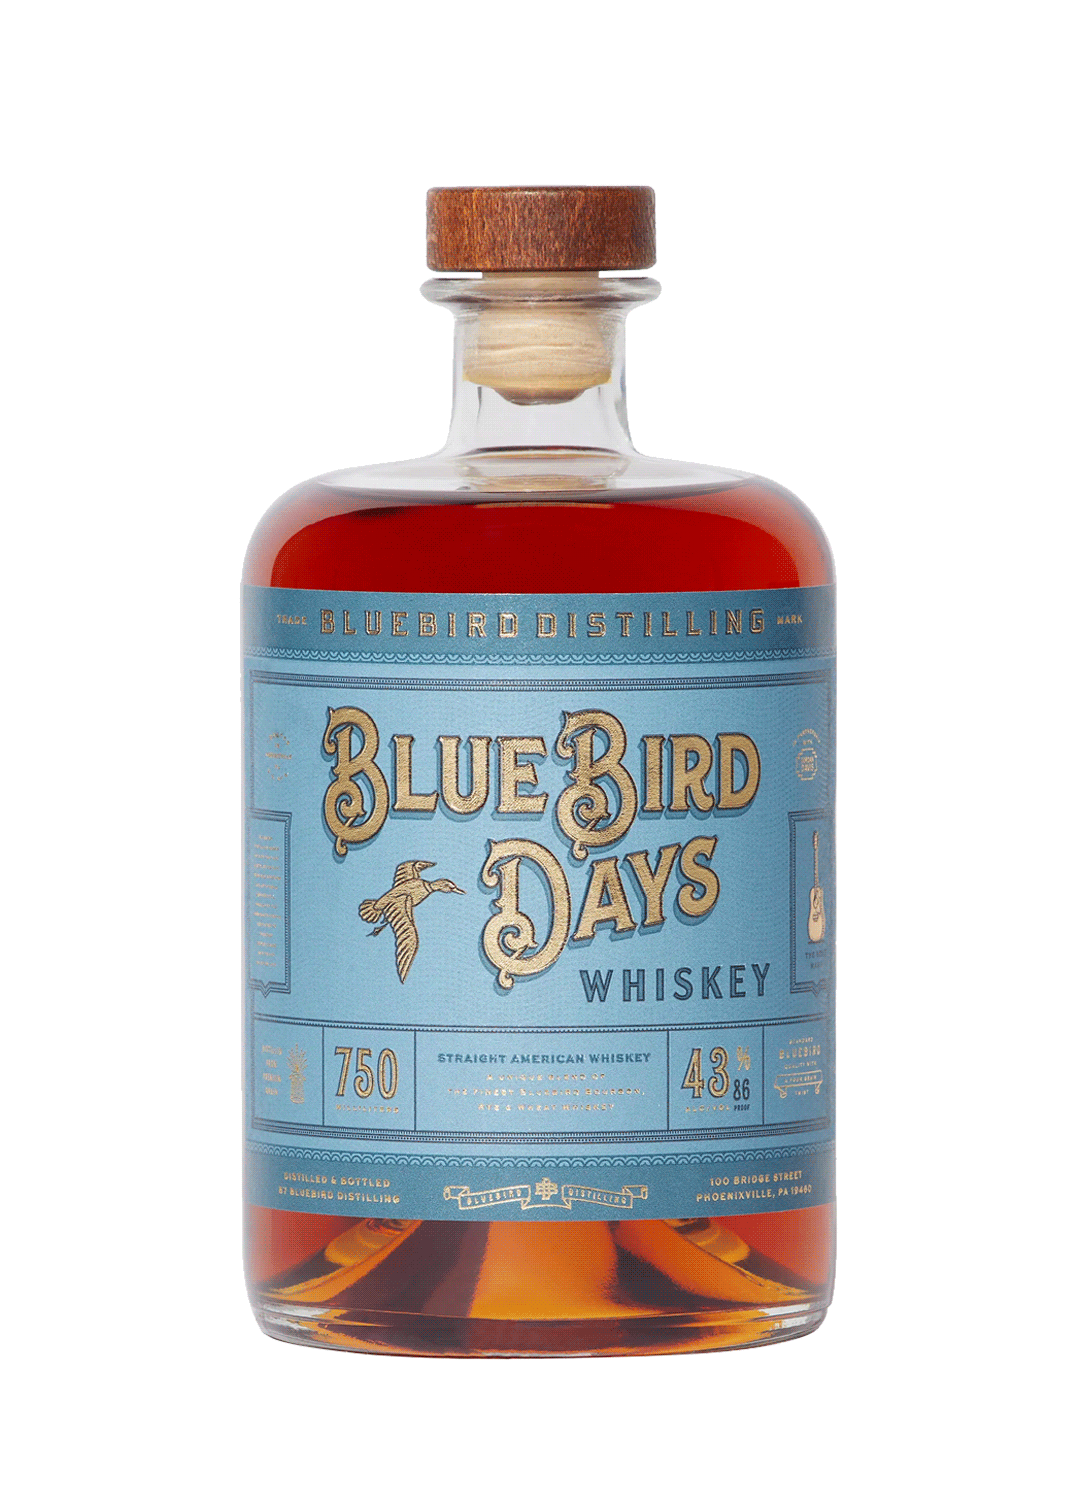 Bluebird Days Whiskey